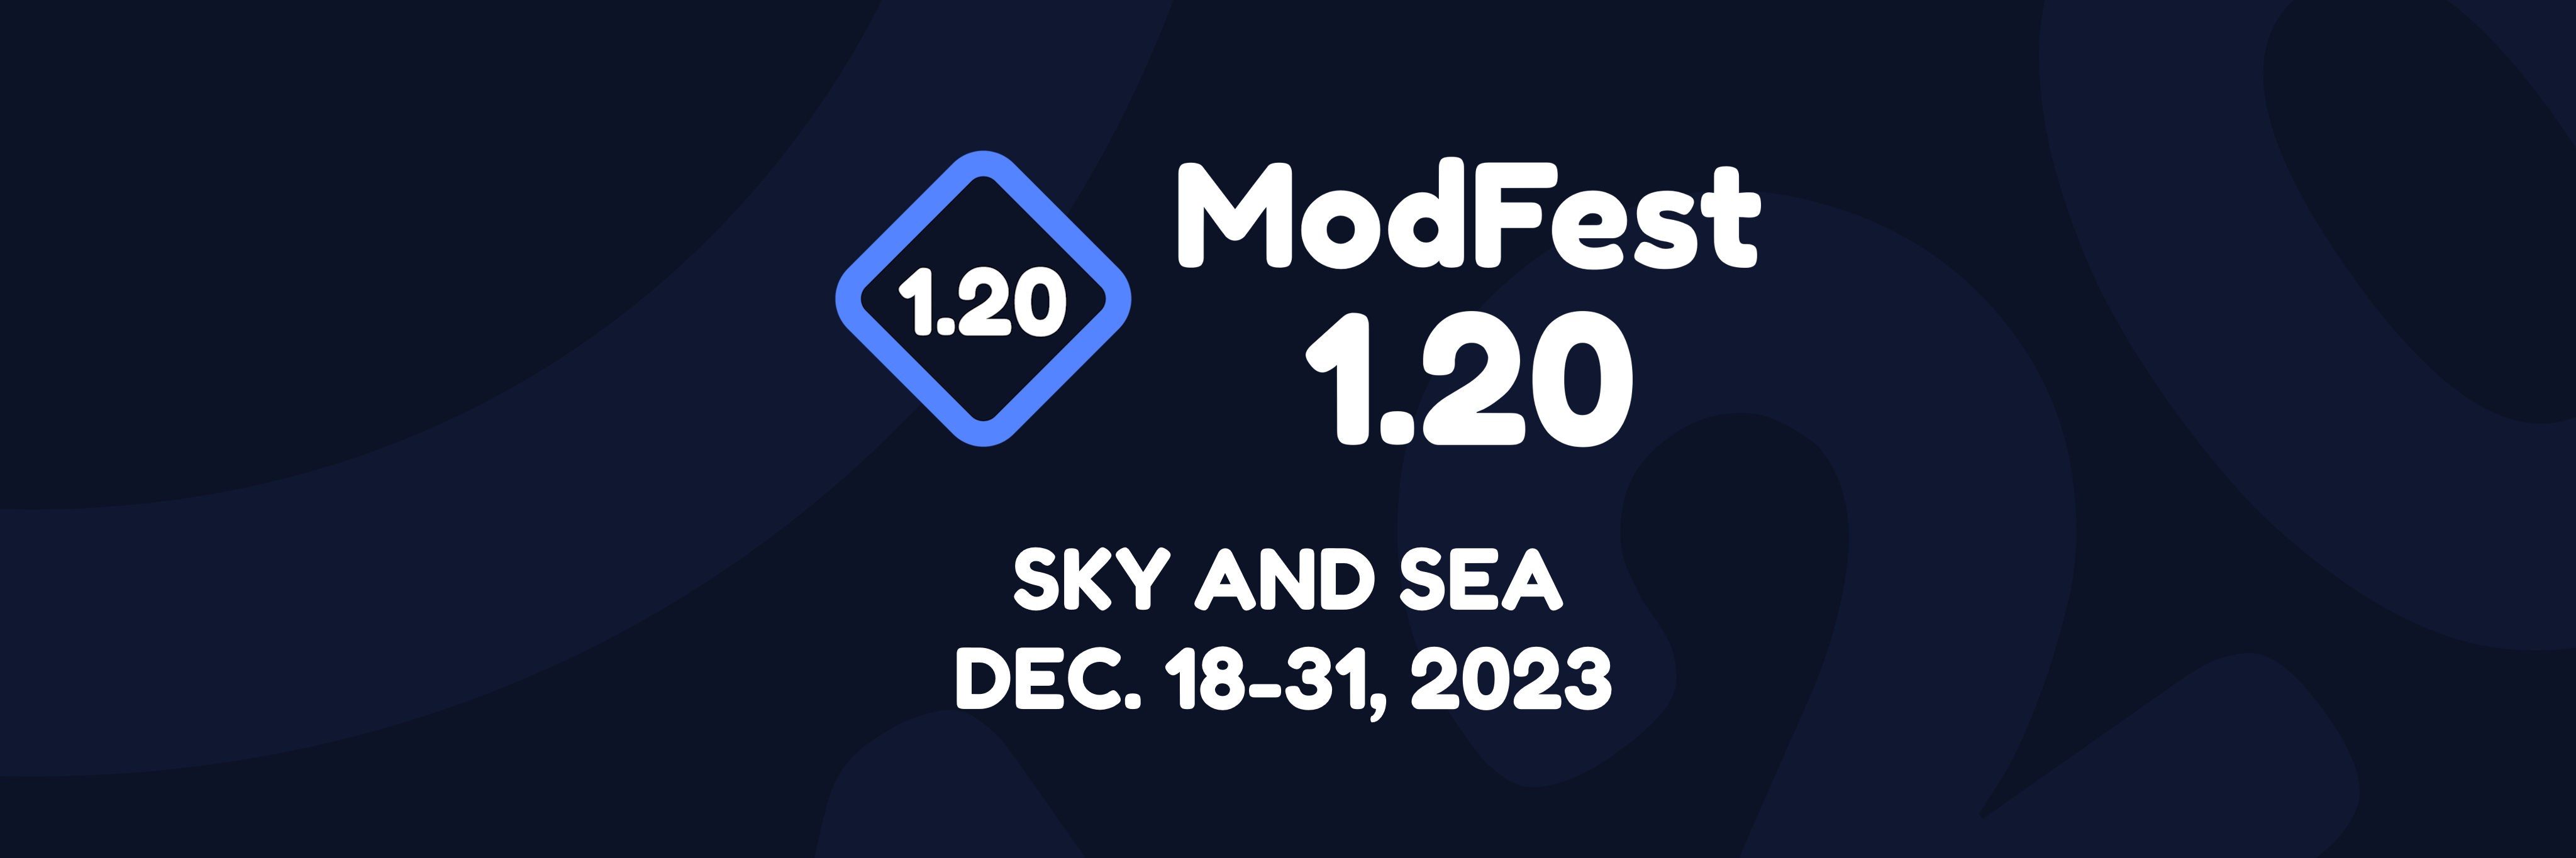 ModFest 1.20 Banner